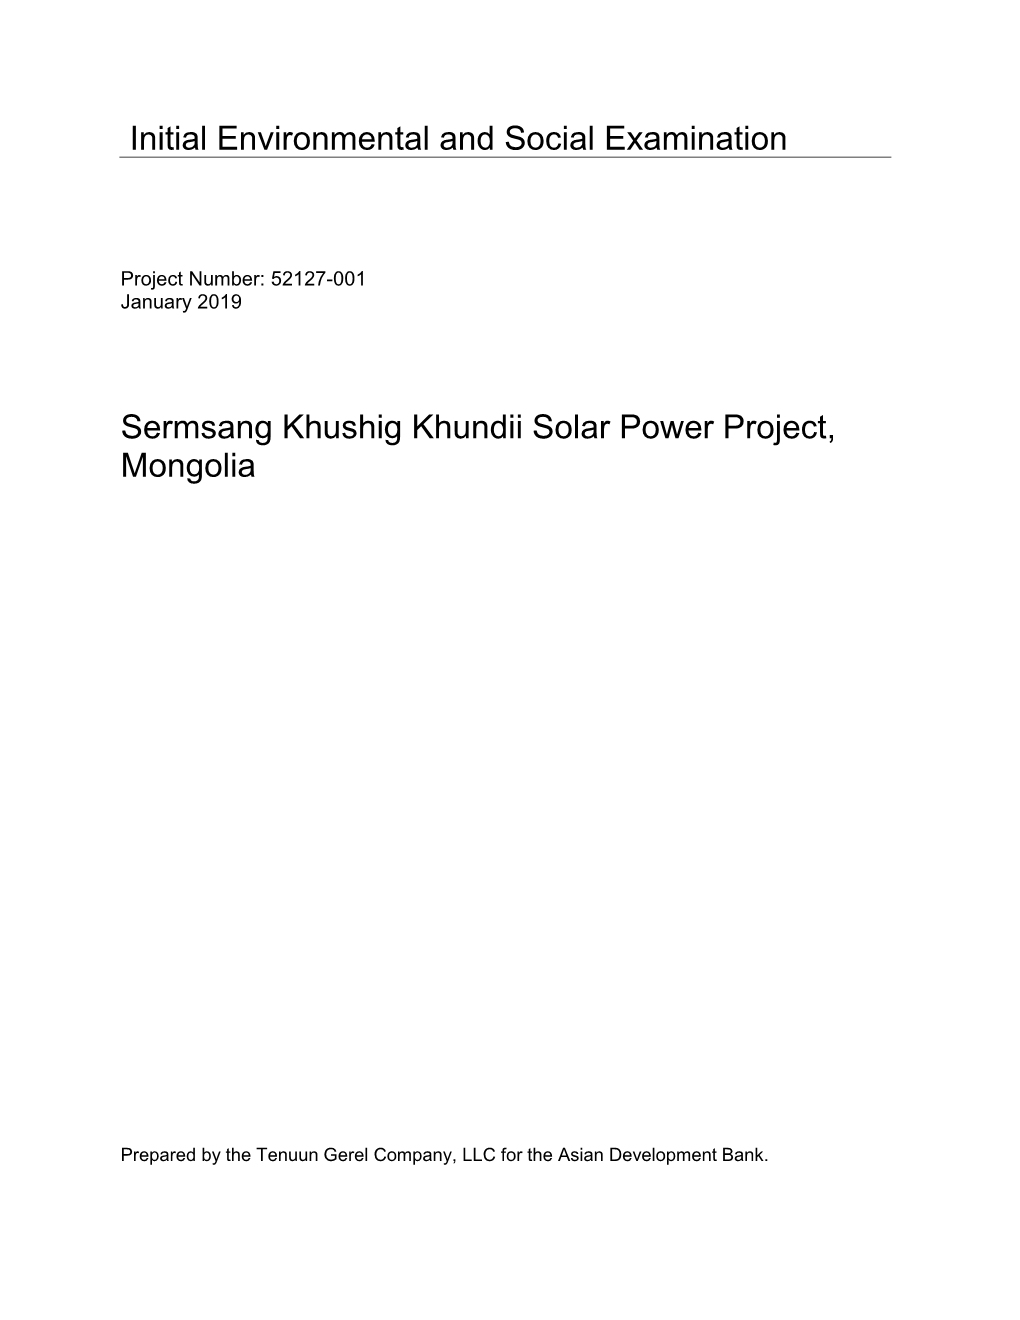 52127-001: Sermsang Khushig Khundii Solar Project